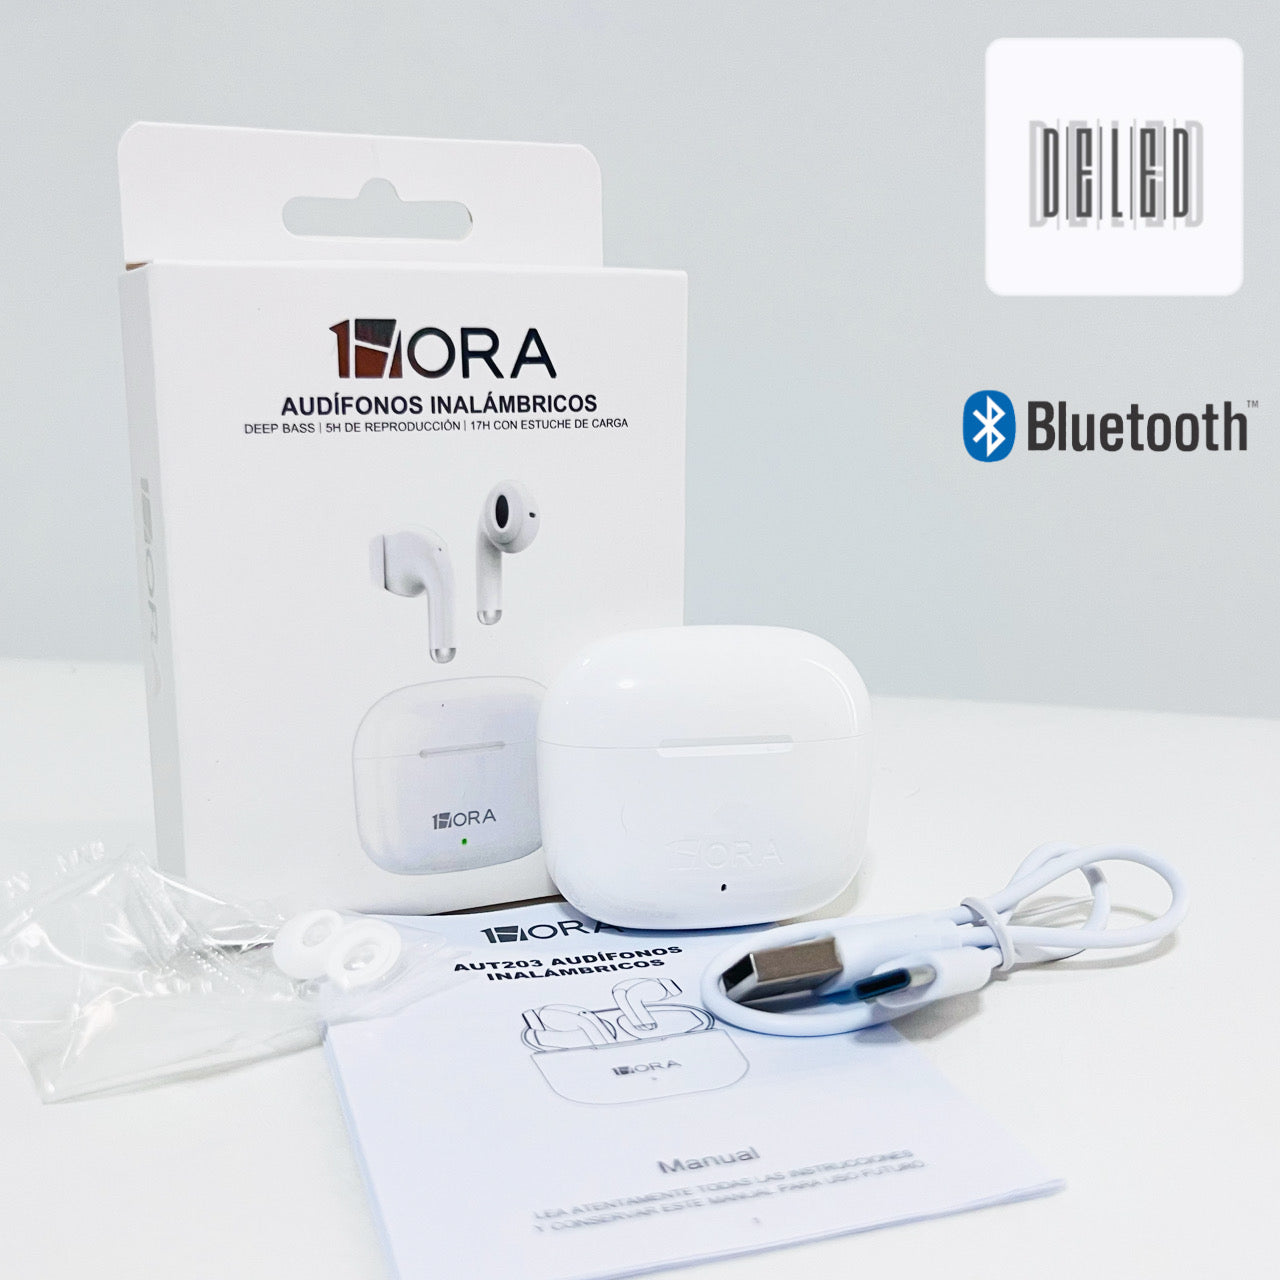 Audífonos Inalámbricos Bluetooth Recargables 1HORA AUT203